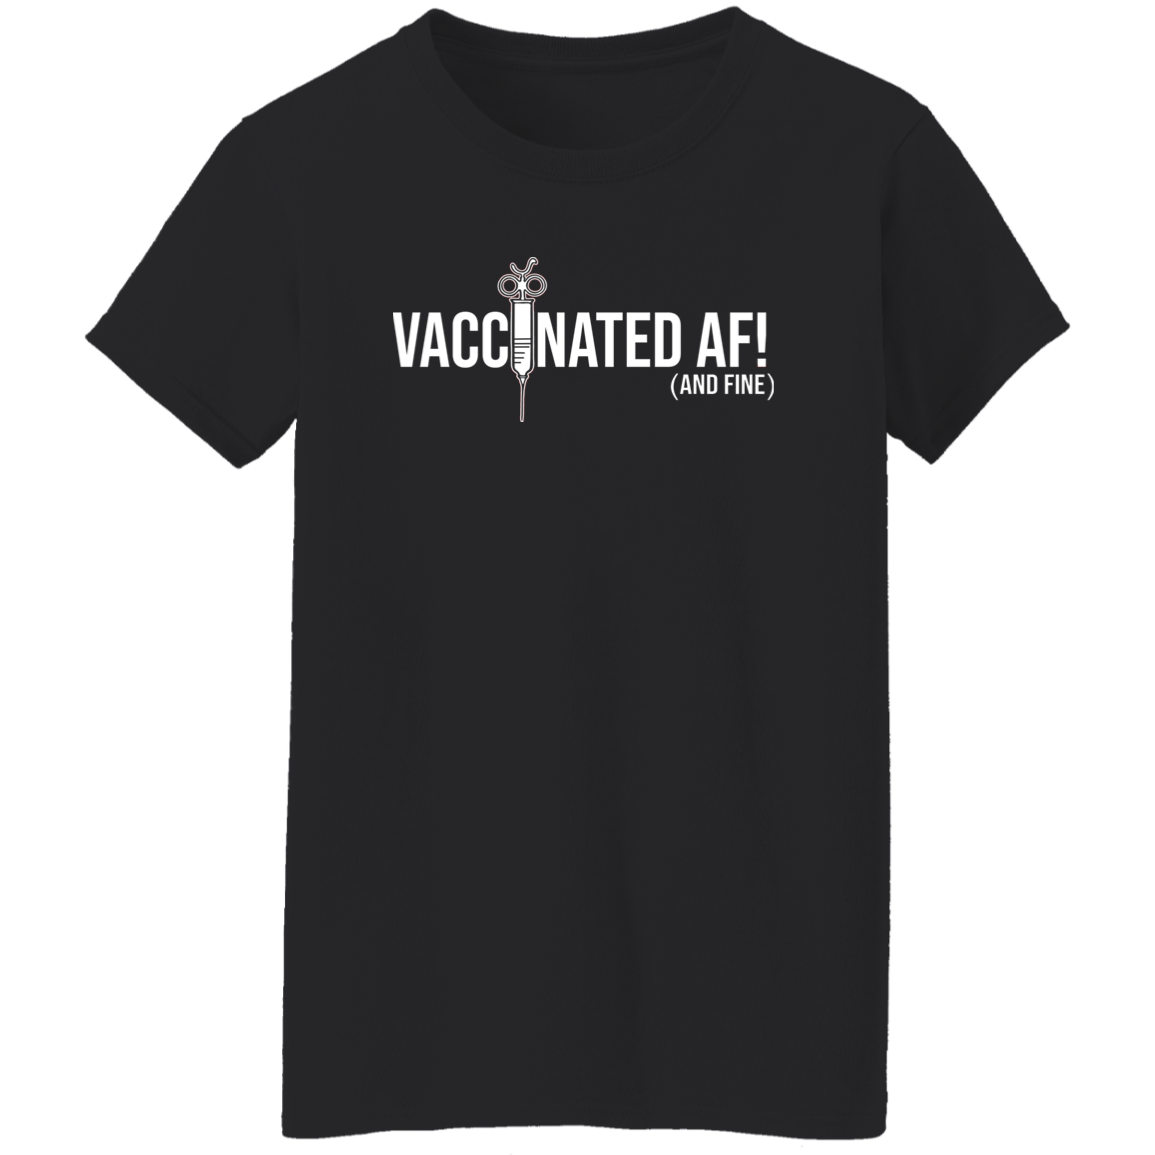 ArtichokeUSA Custom Design. Vaccinated AF (and fine). Ladies' 5.3 oz. T-Shirt